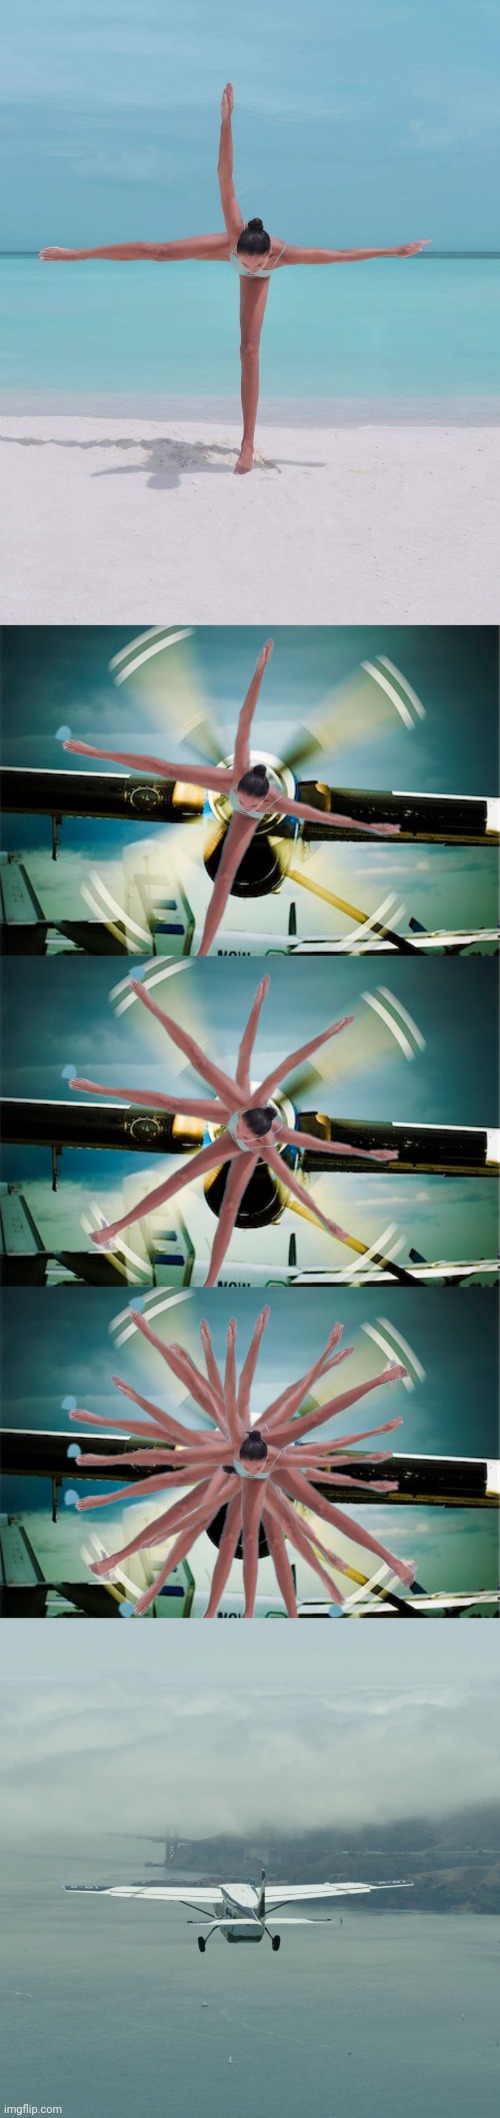 Propeller Balance | image tagged in beach,ballet,balance,spinning,plane,flying | made w/ Imgflip meme maker